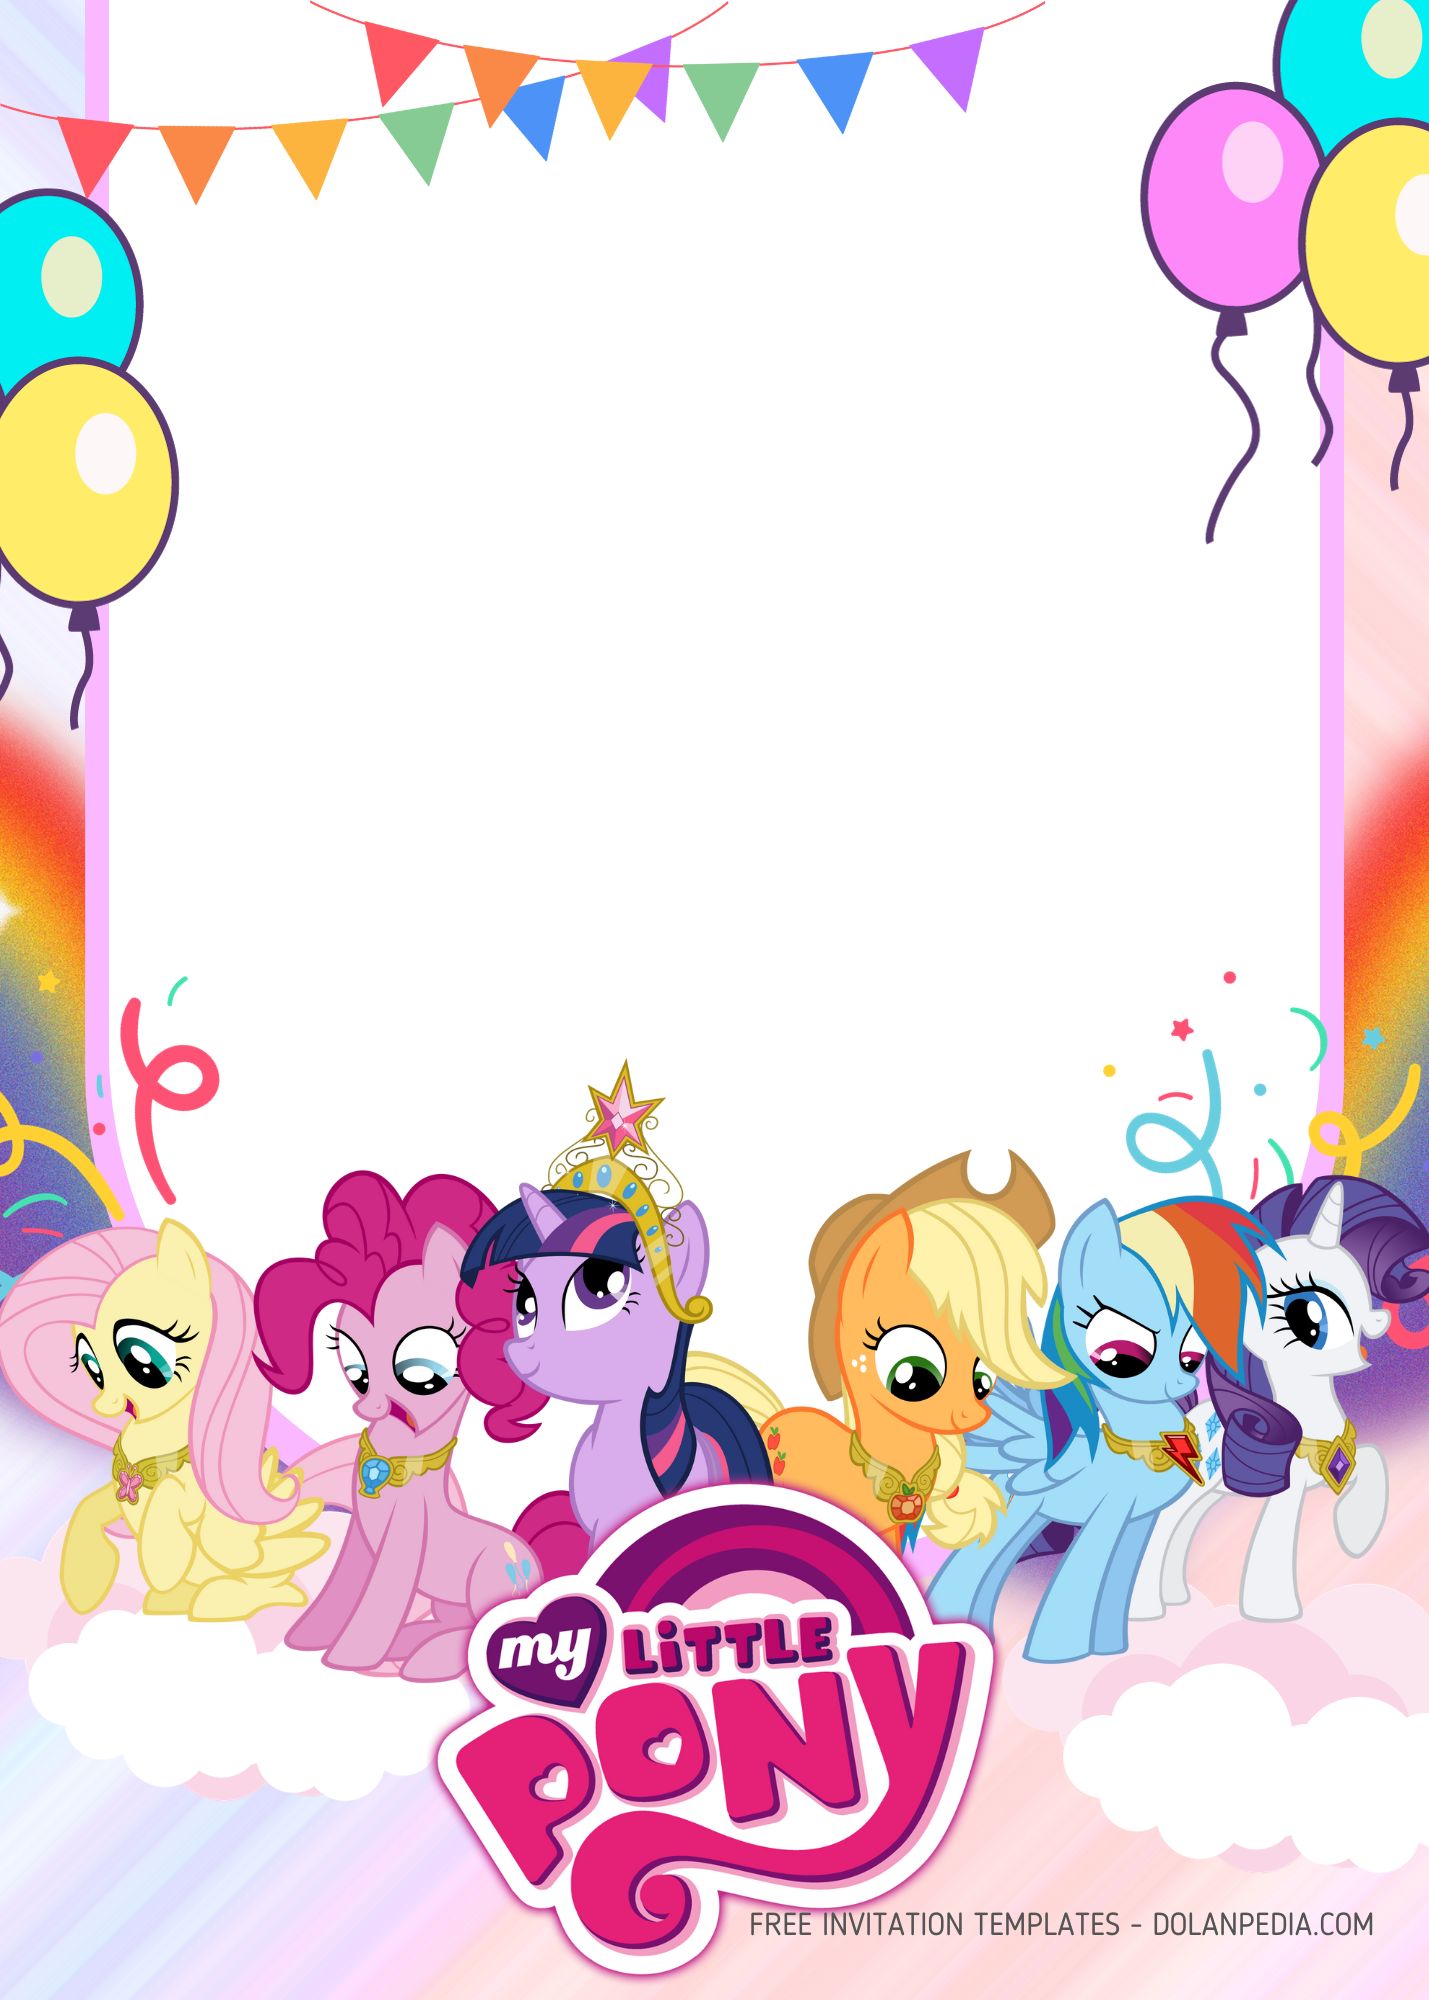 FREE My Little Pony Rainbow Party Invitation Templates